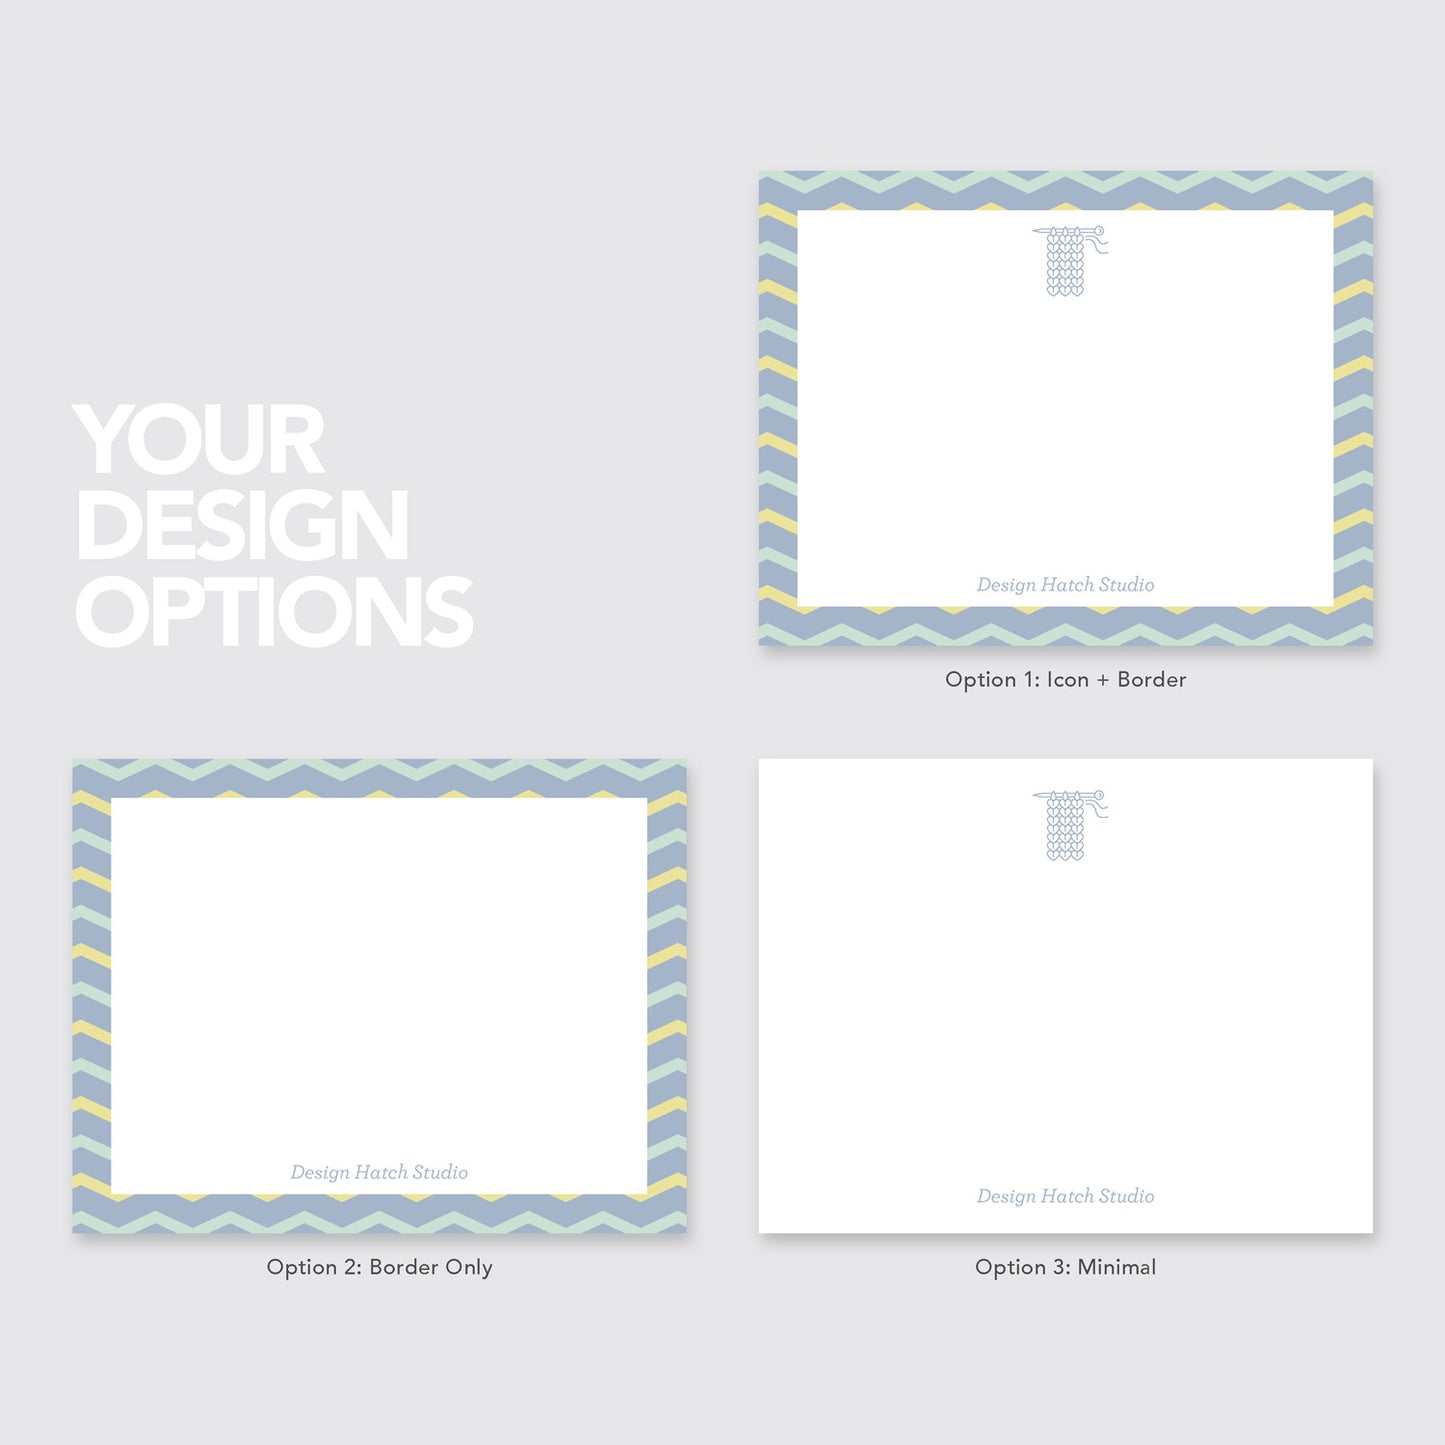 Knitting - Custom Stationery - 24 flat cards with envelopes - Design Hatch Studio